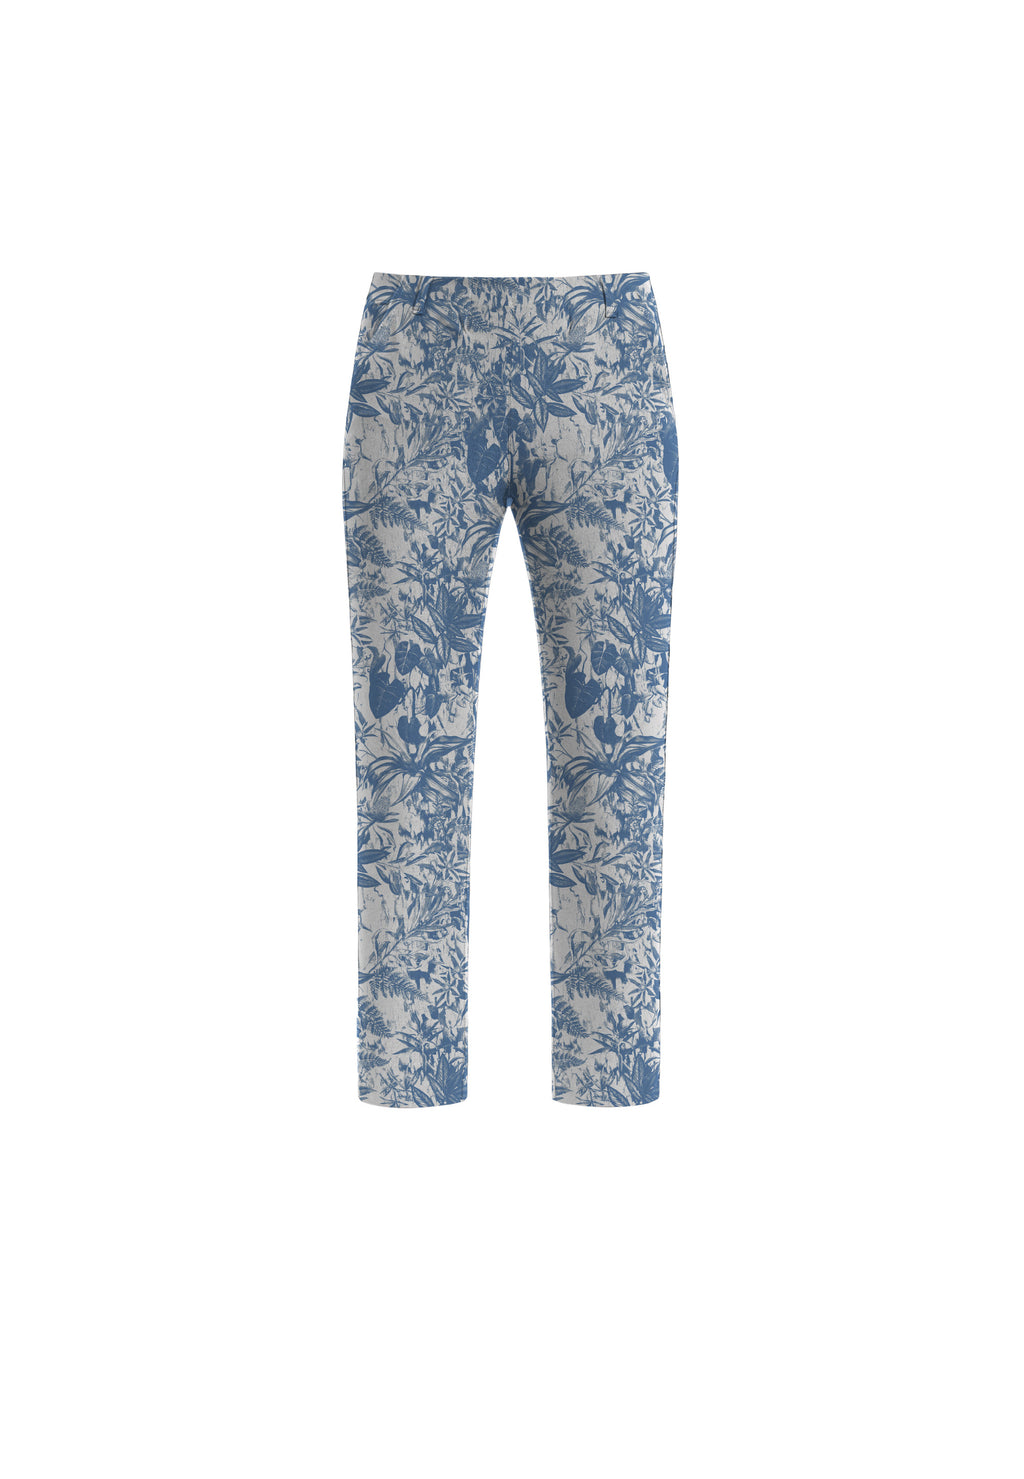 LAURIE  Taylor Regular - Short Length Trousers REGULAR 44110 Flower Print